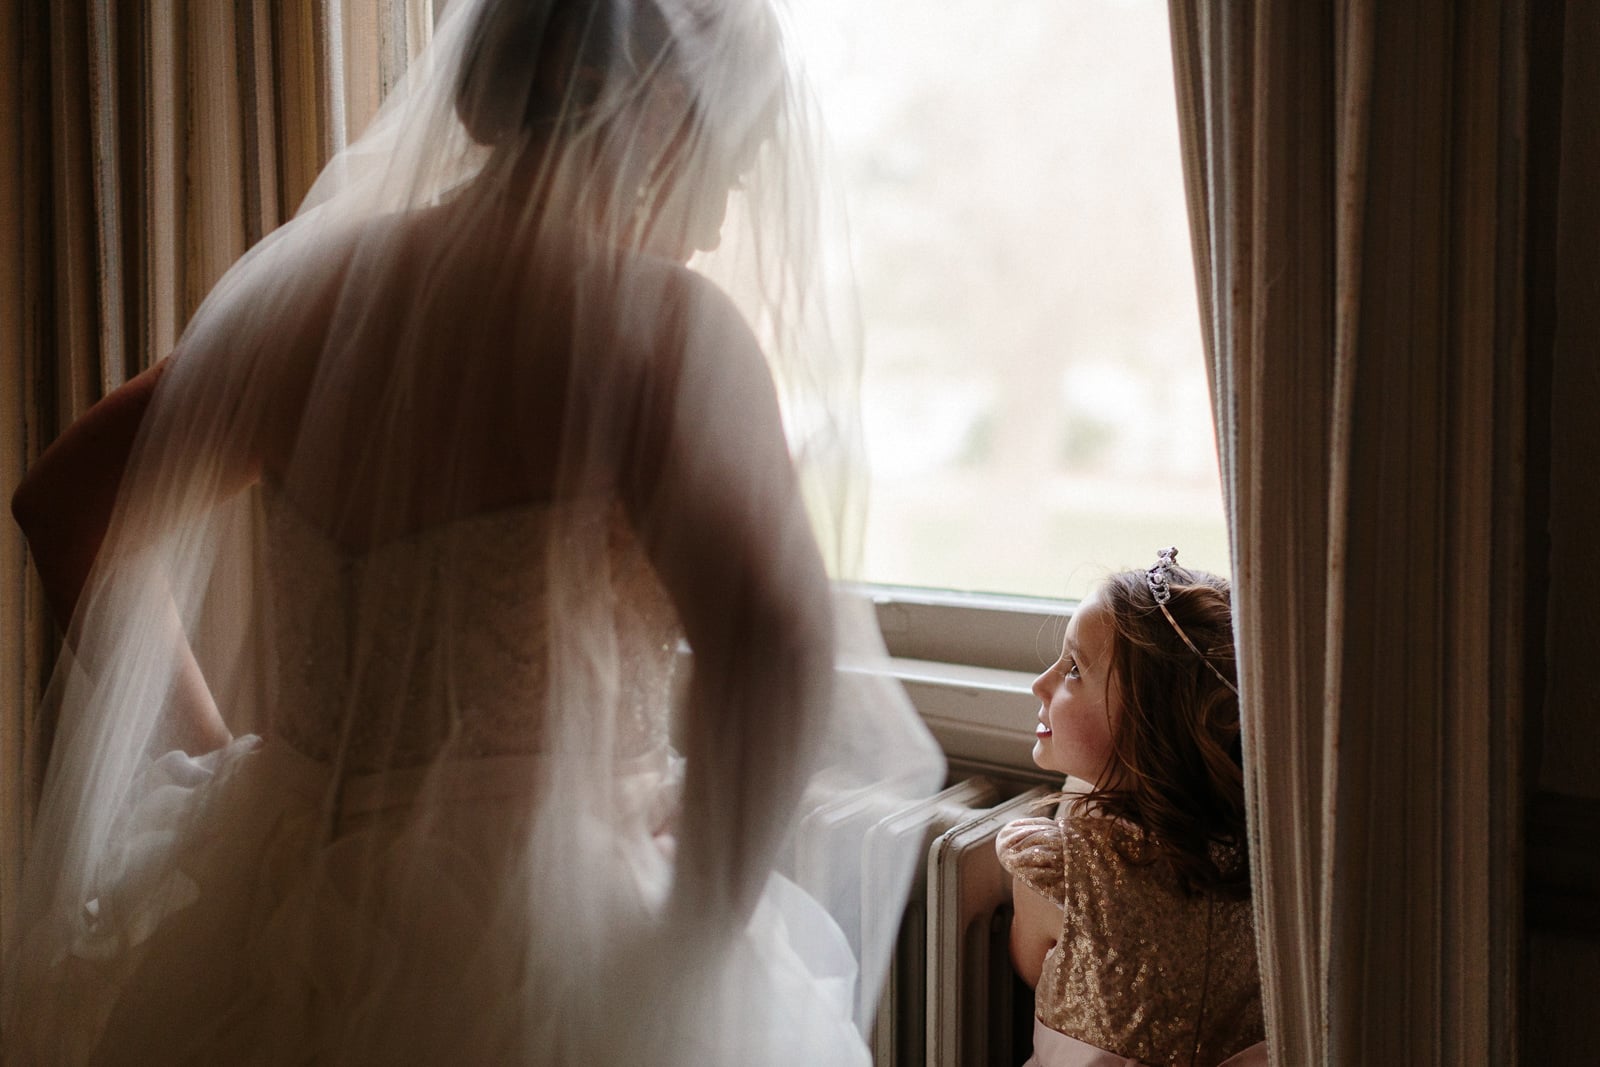 015-bride-and-flower-girl-at-window.jpg